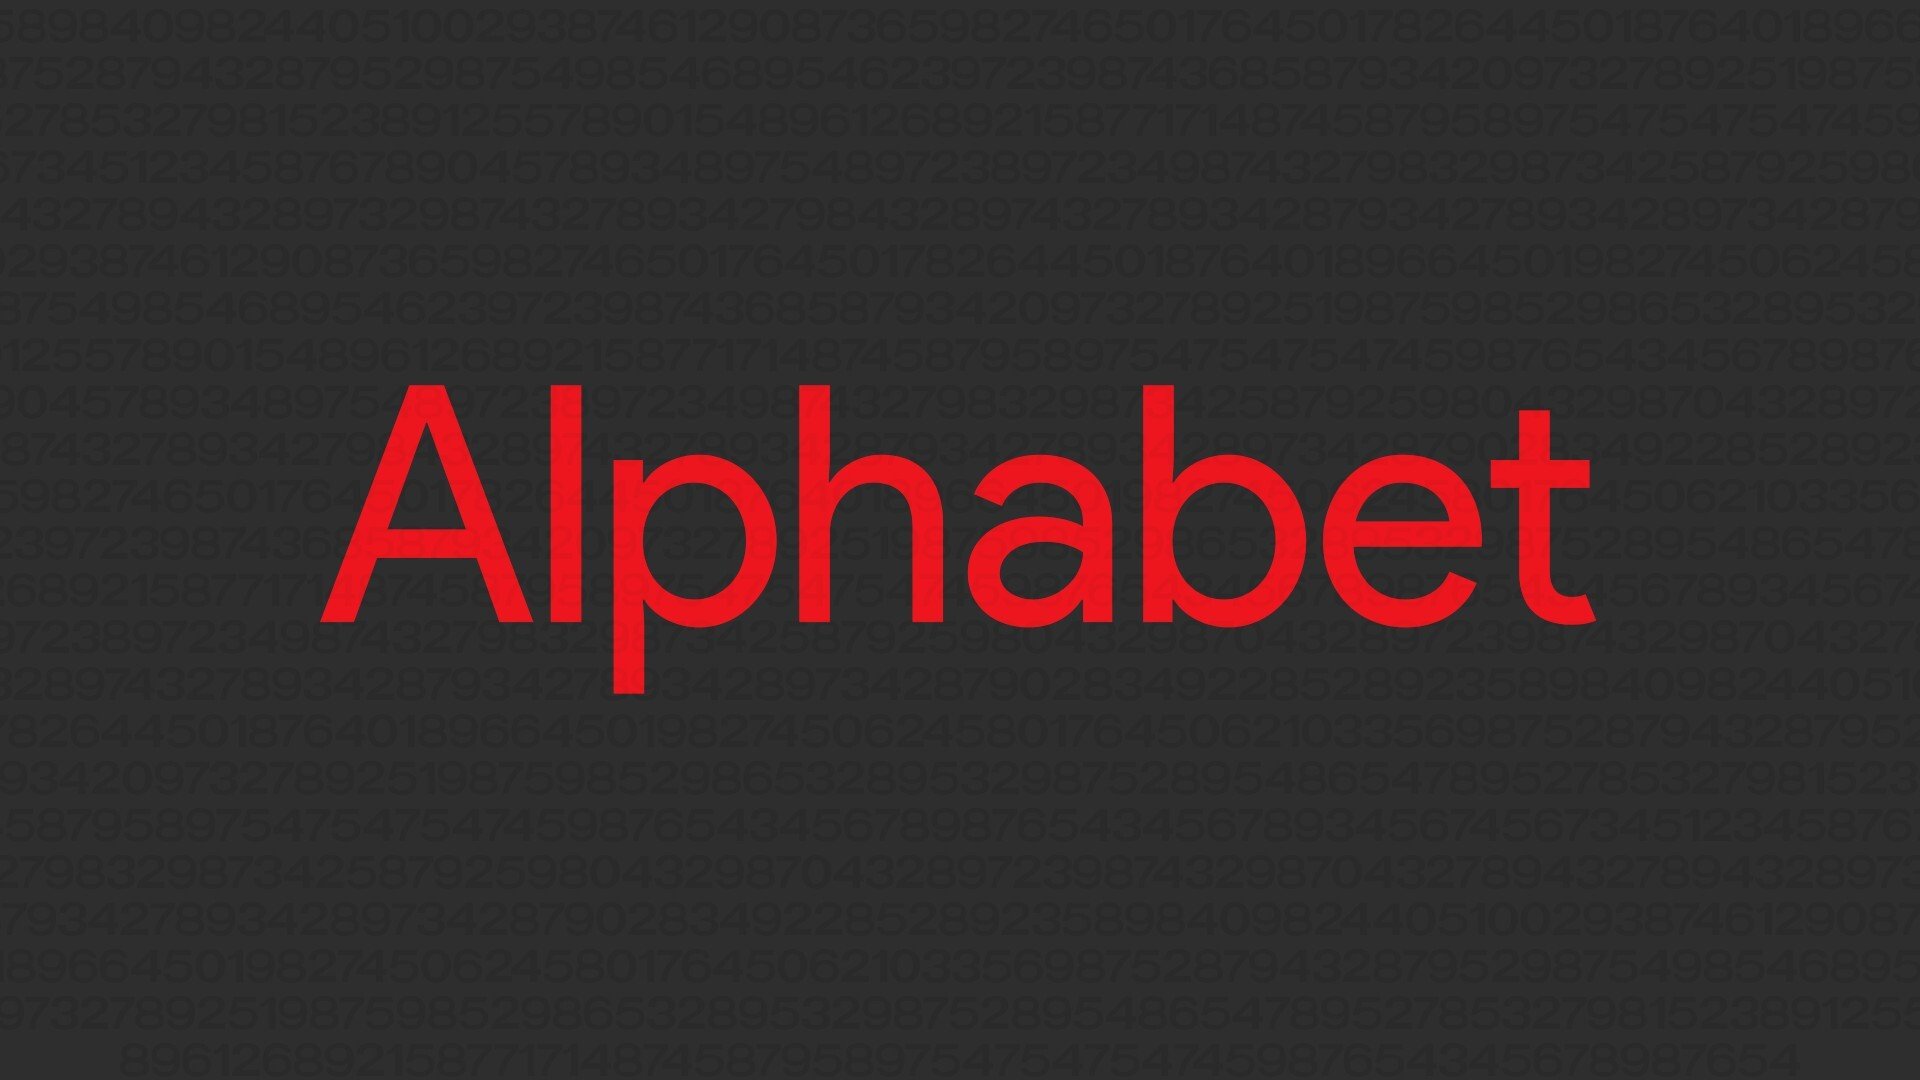 Alphabet reports more than $75 billion in fourth-quarter revenue, record Pixel sales